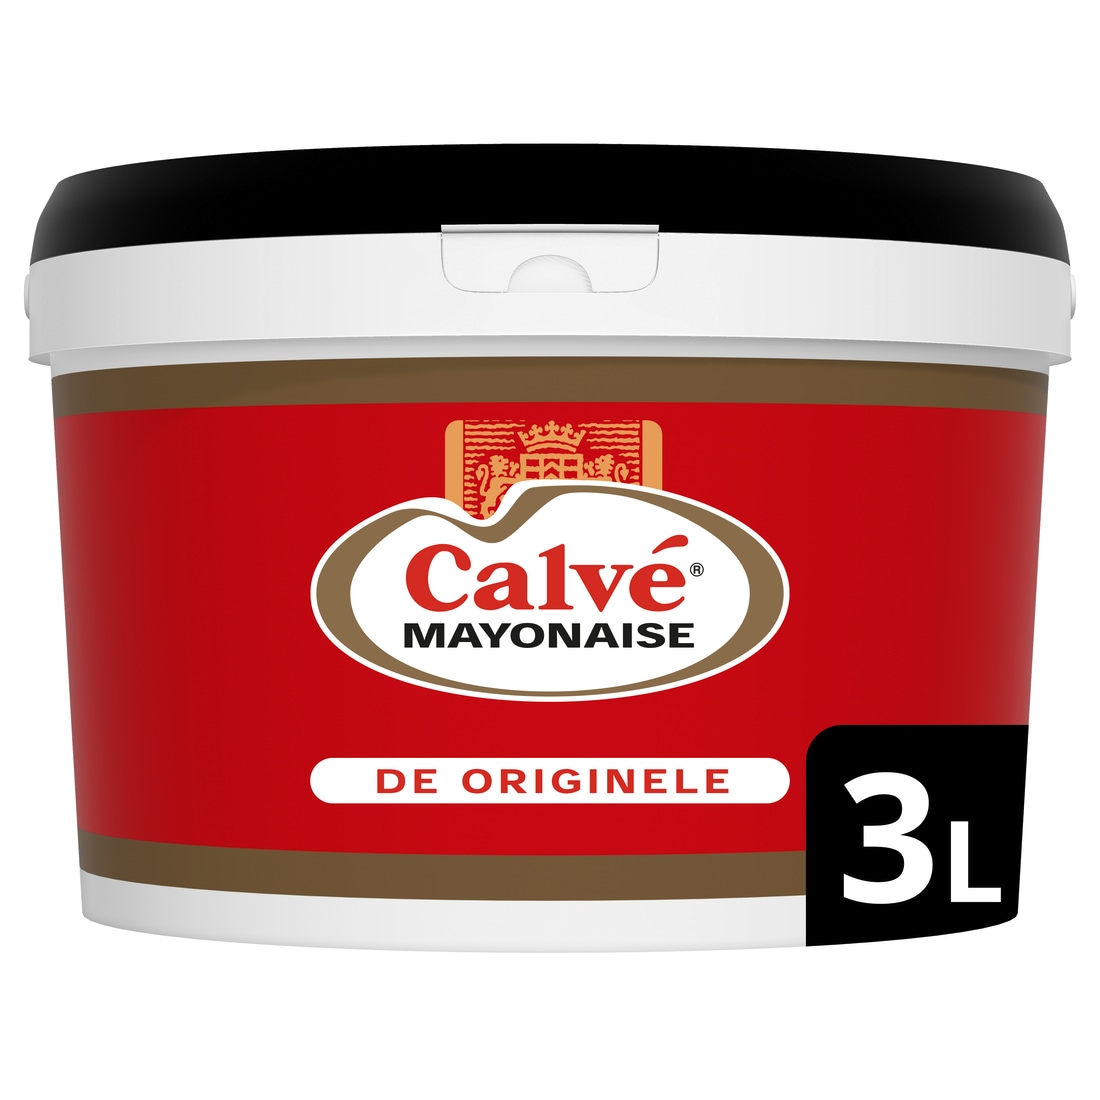 Calvé Mayonaise Origineel 3L - 